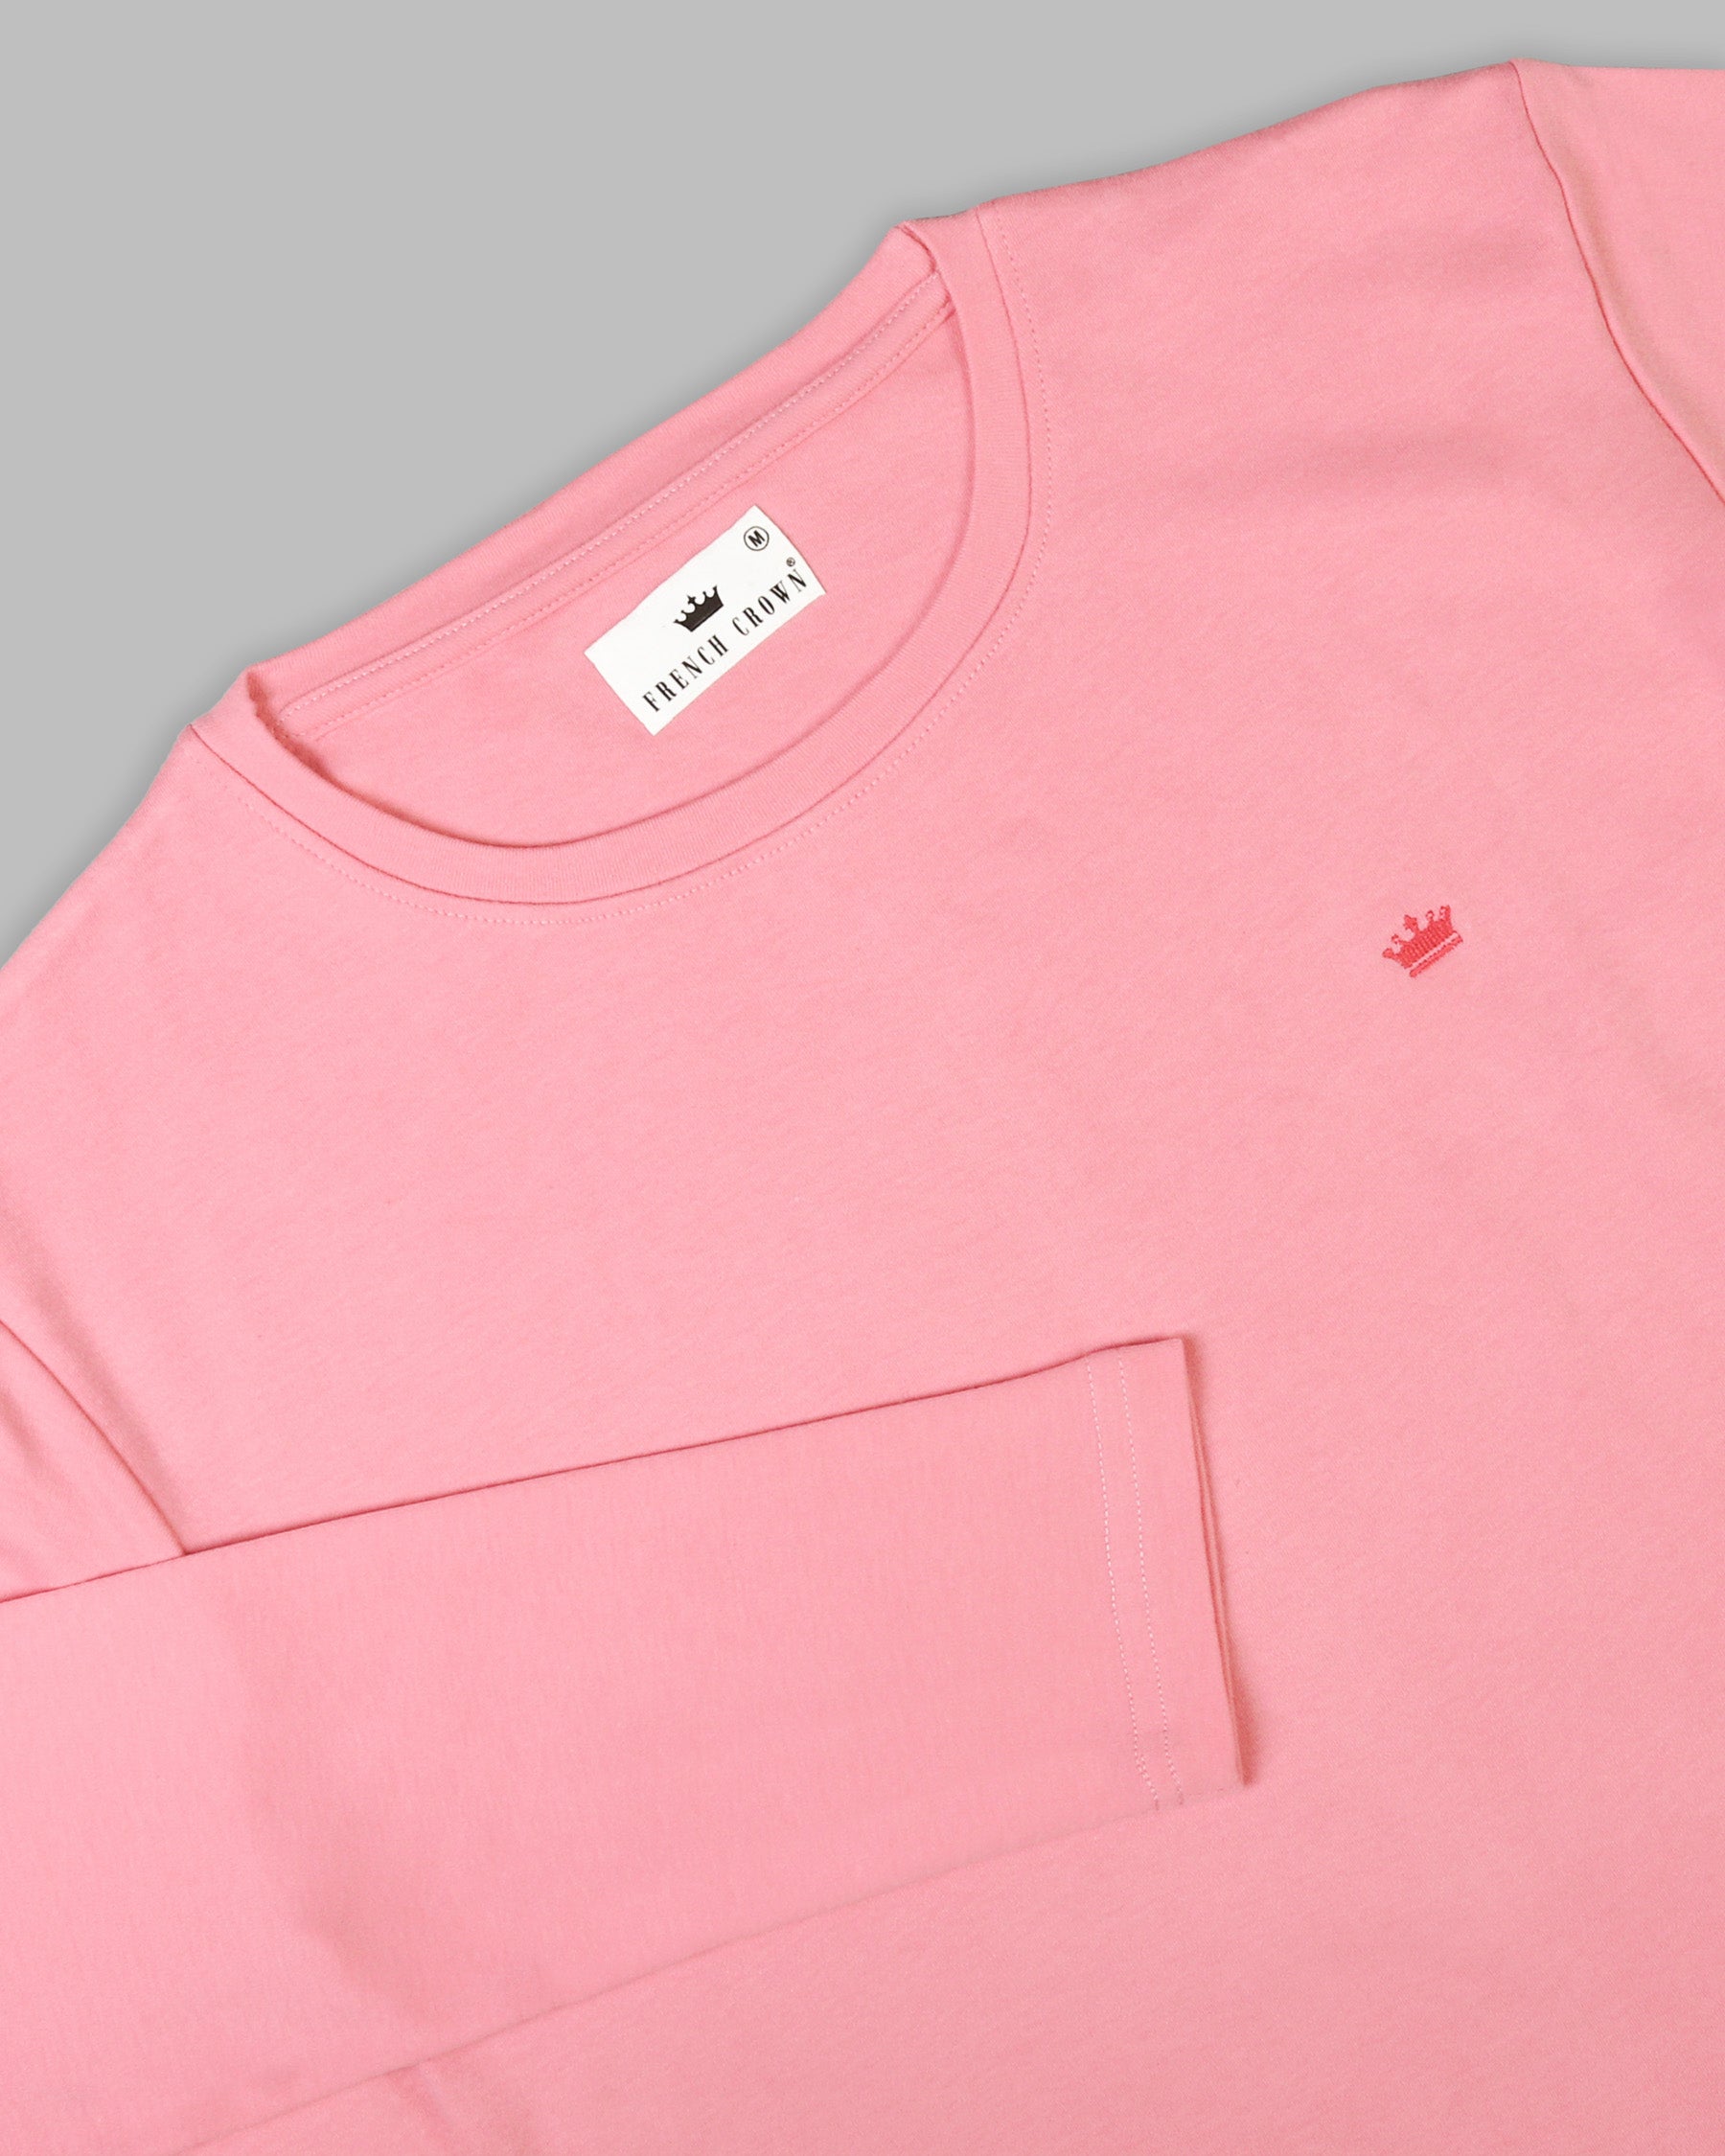 Punch Pink Full-Sleeve Super soft Organic Cotton Jersey T-shirt TS117-S, TS117-M, TS117-L, TS117-XL, TS117-XXL